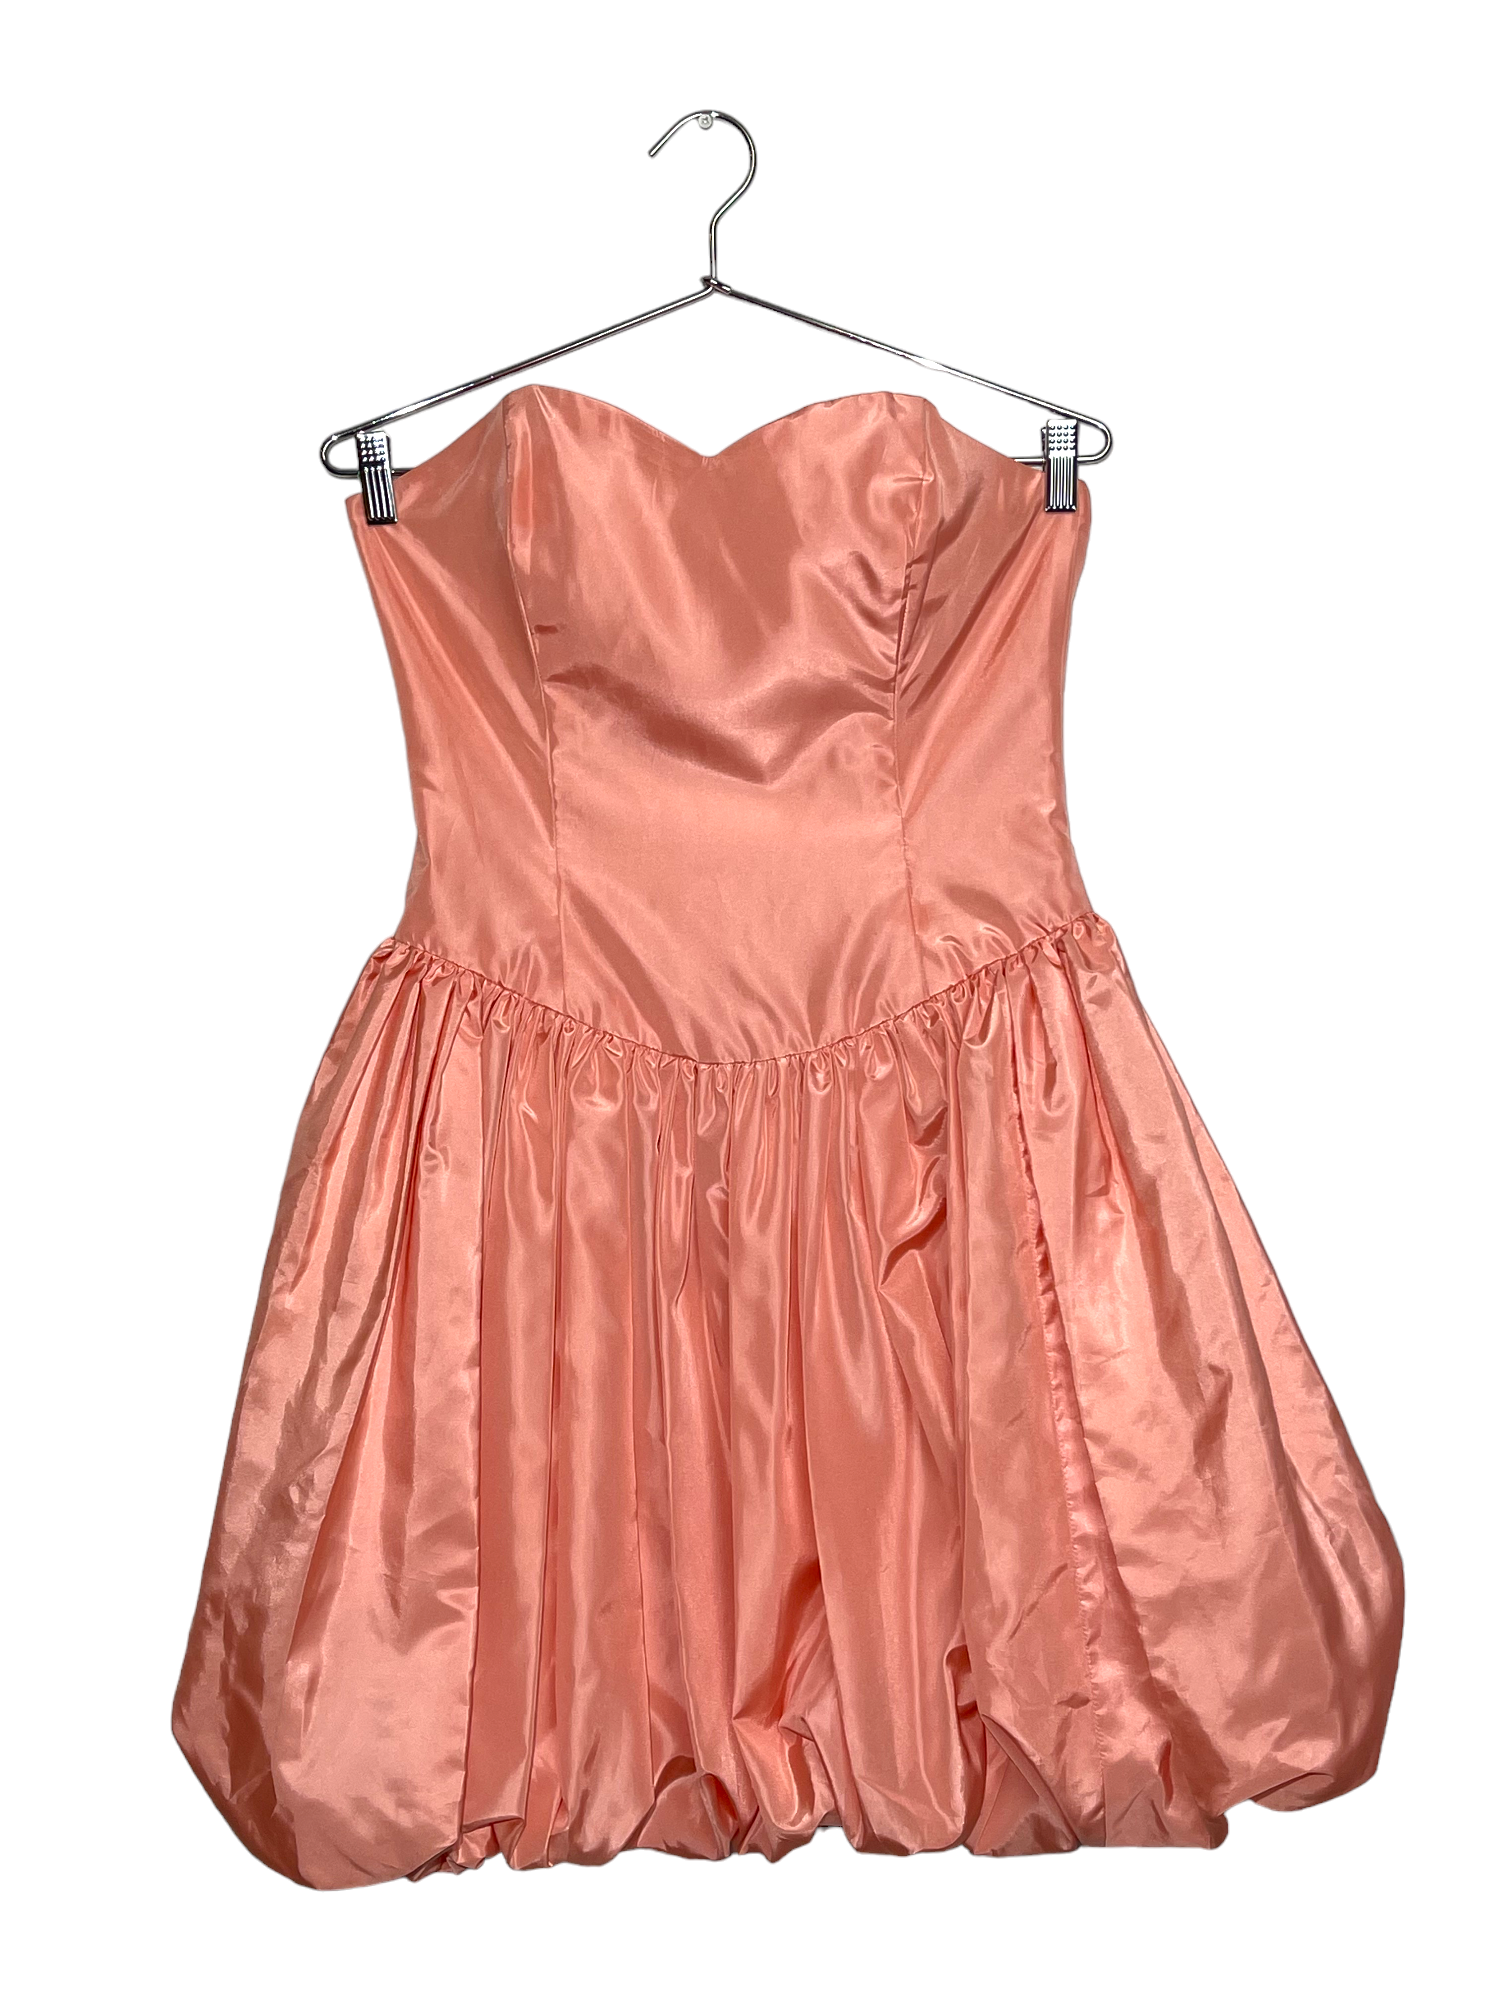 Cupcake Pink Prom Dress